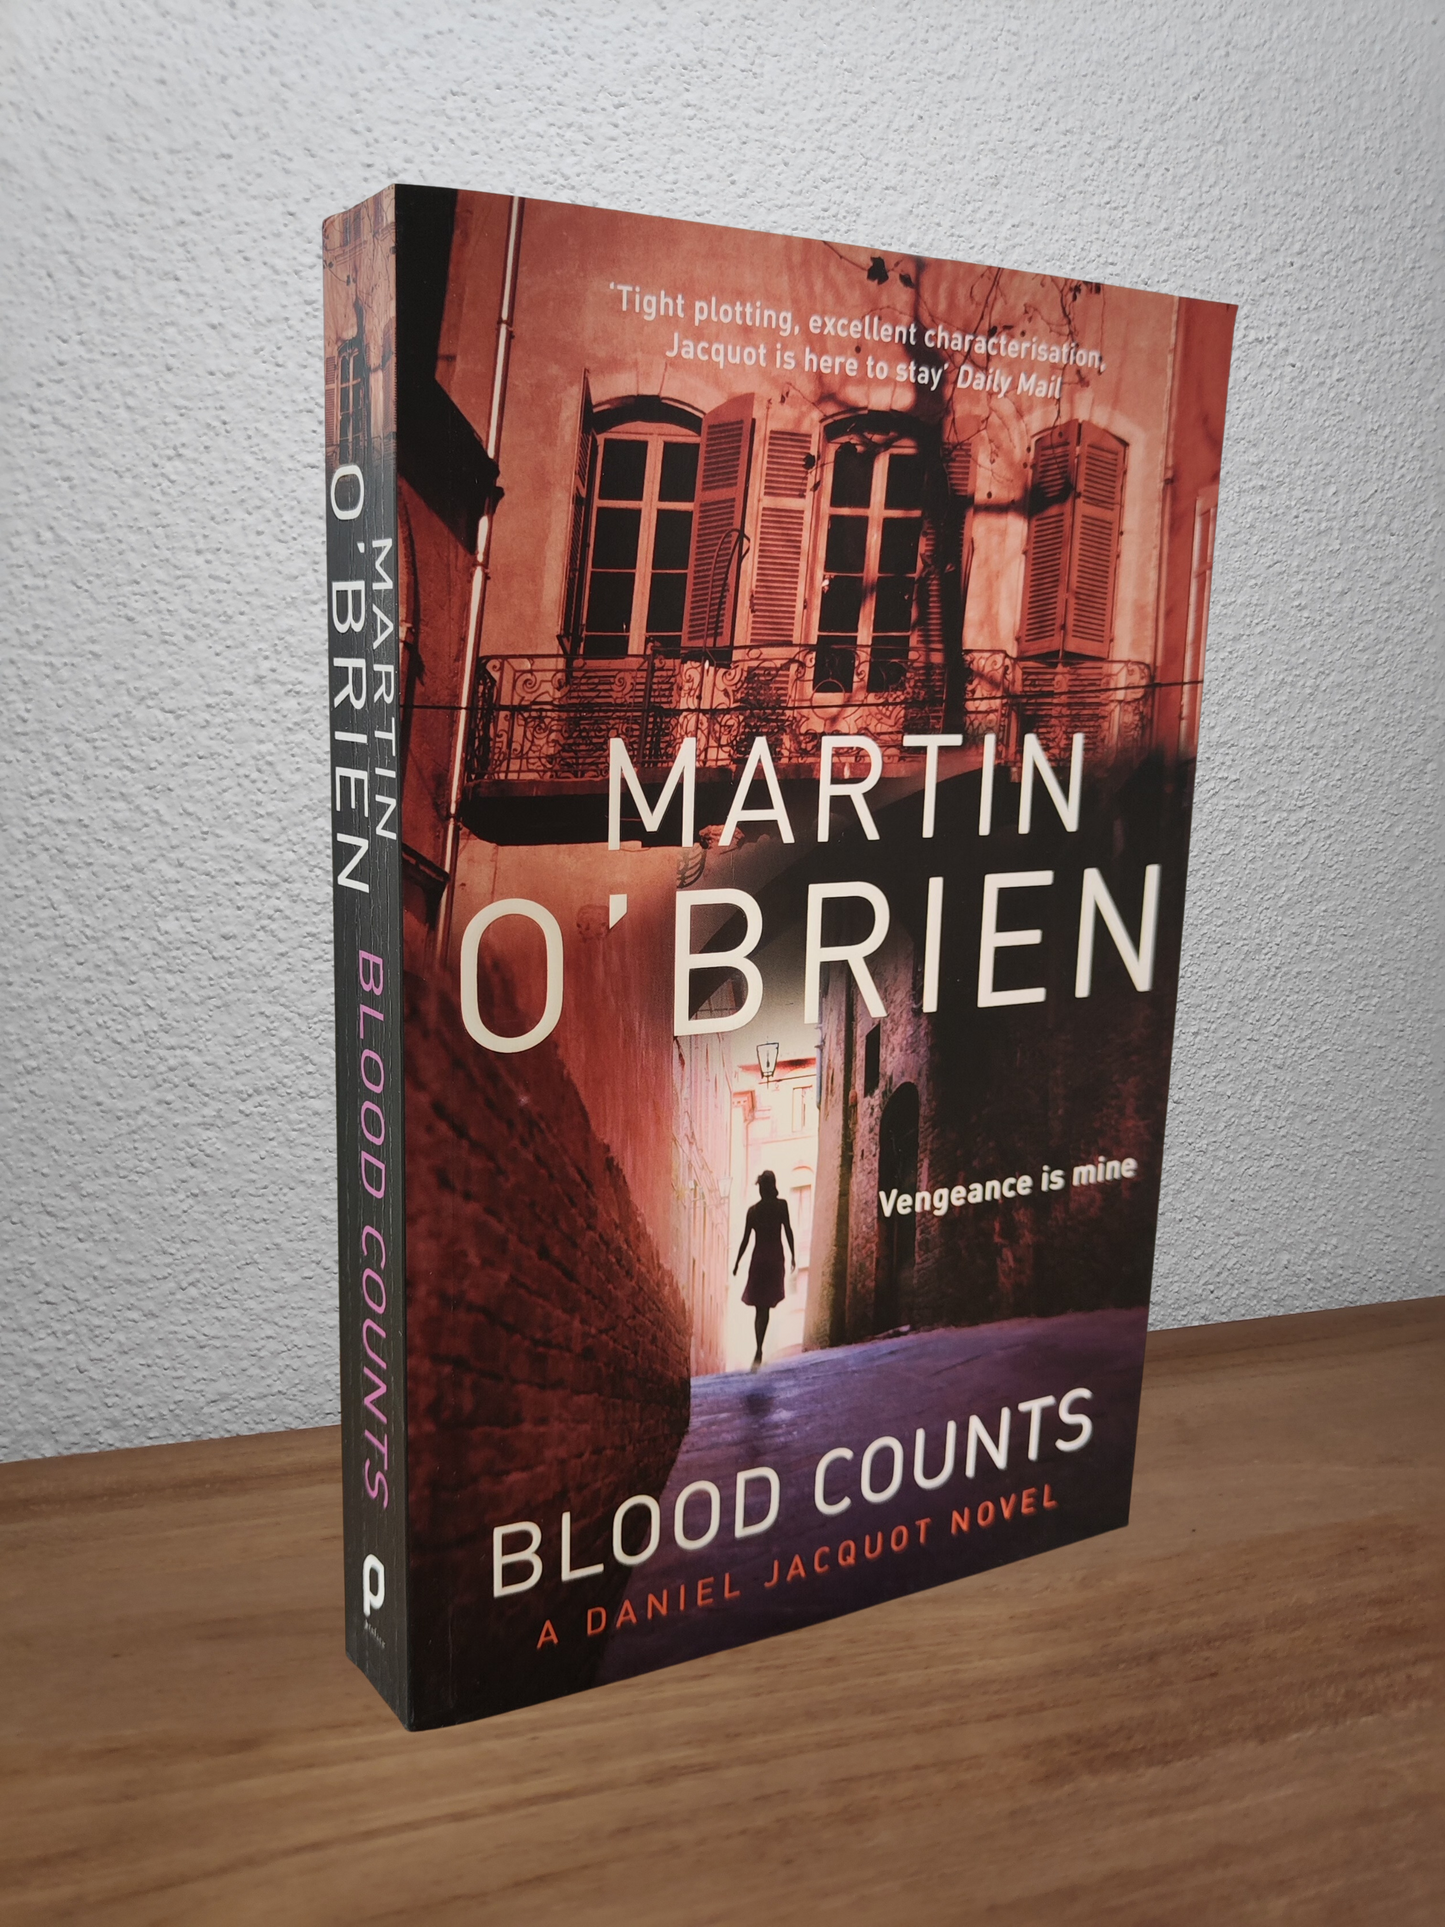 Martin O'Brien - Blood Counts (Daniel Jacquot #6)